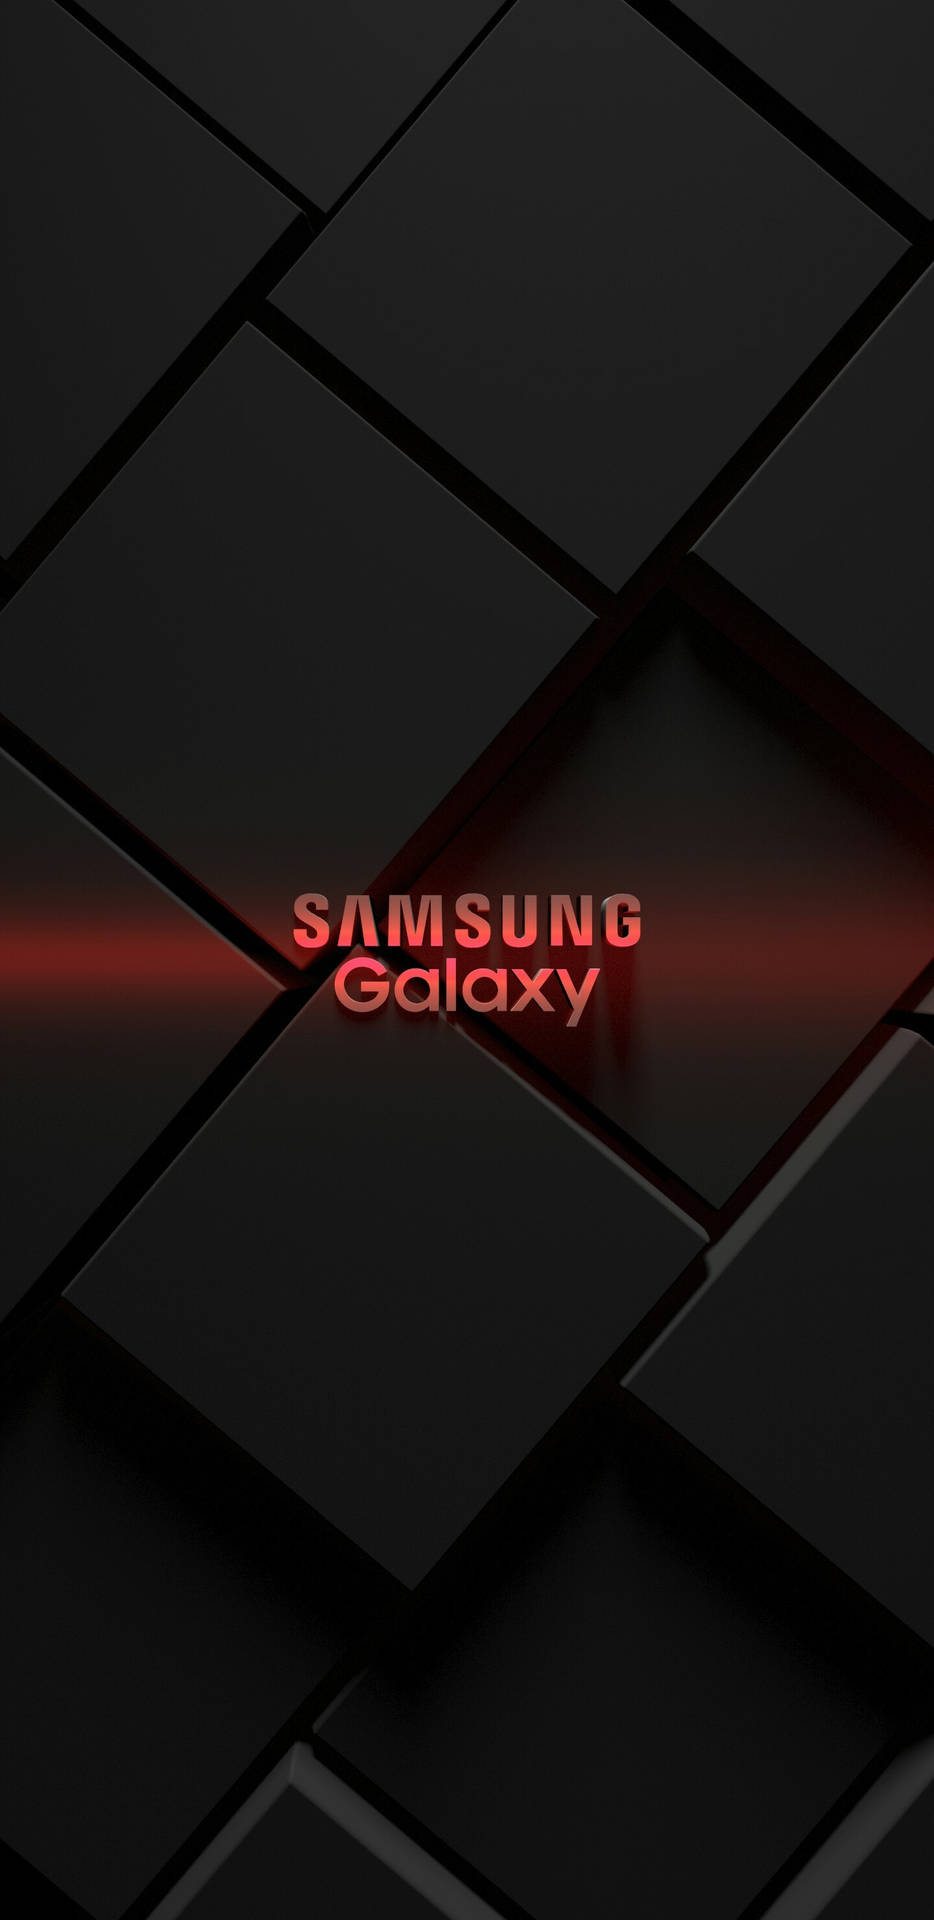 Samsung Galaxy Geometric Red Light